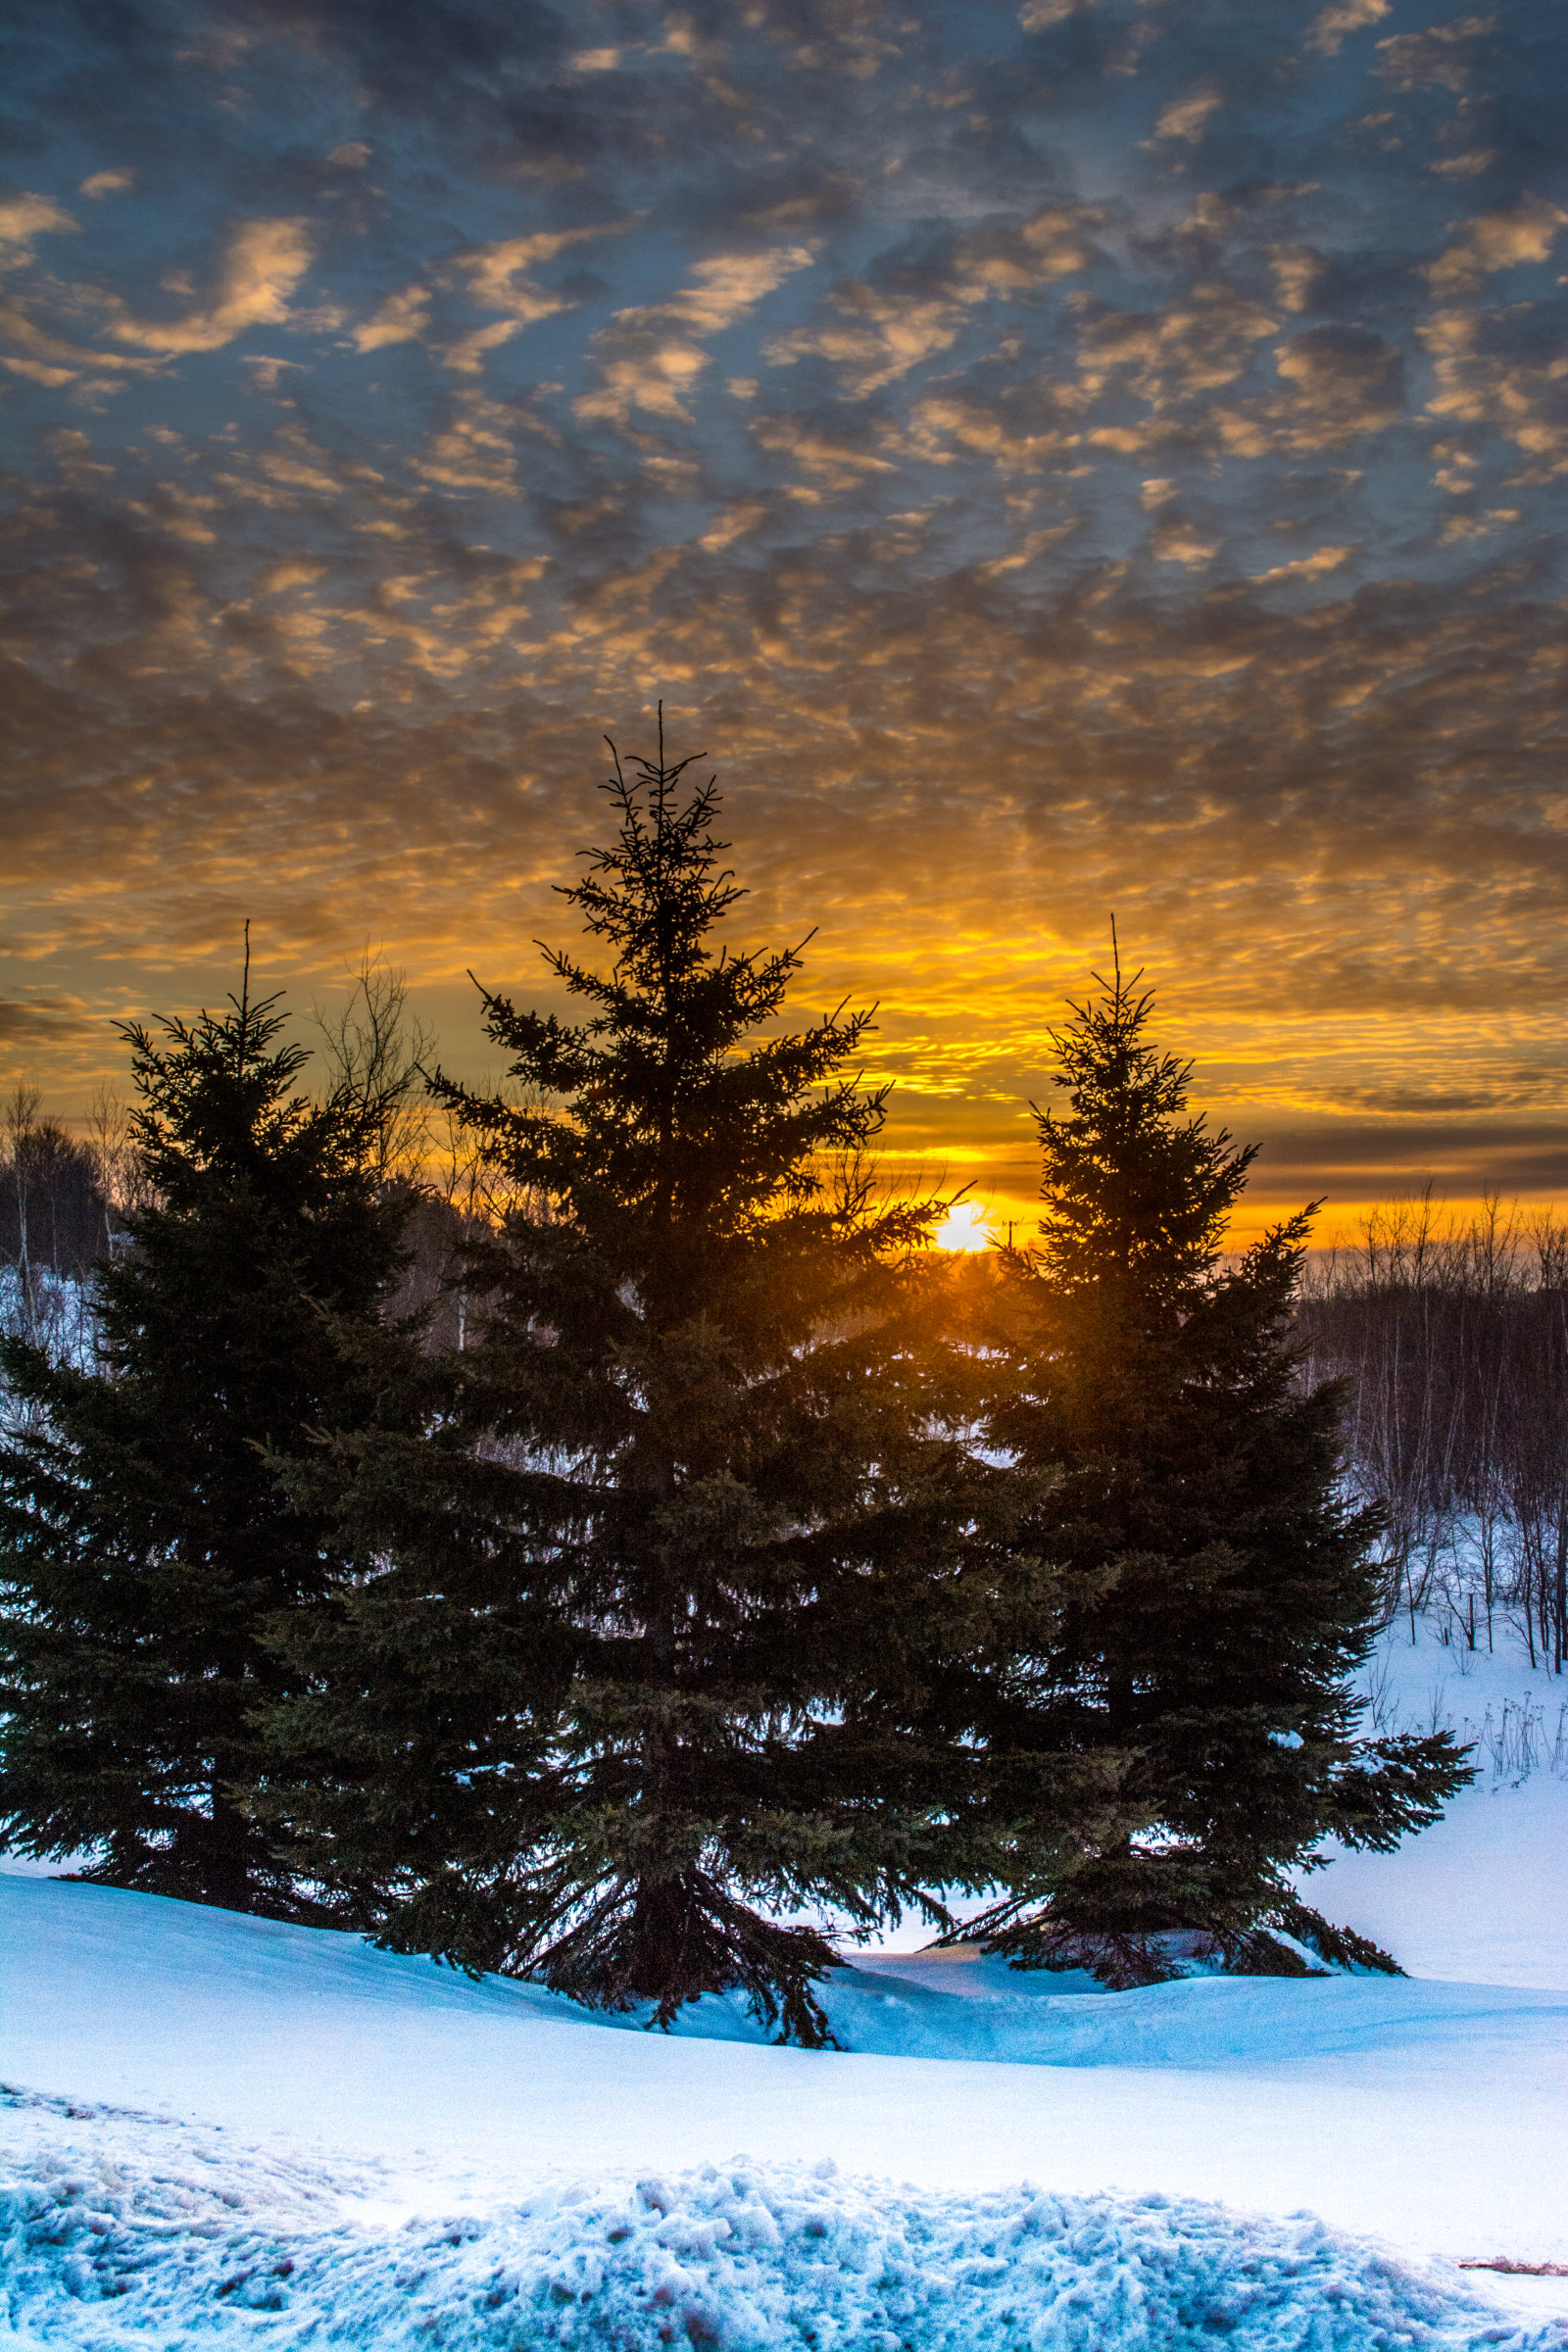 Lock Screen PC Wallpaper landscape, winter, nature, trees, sunset, snow, fir trees